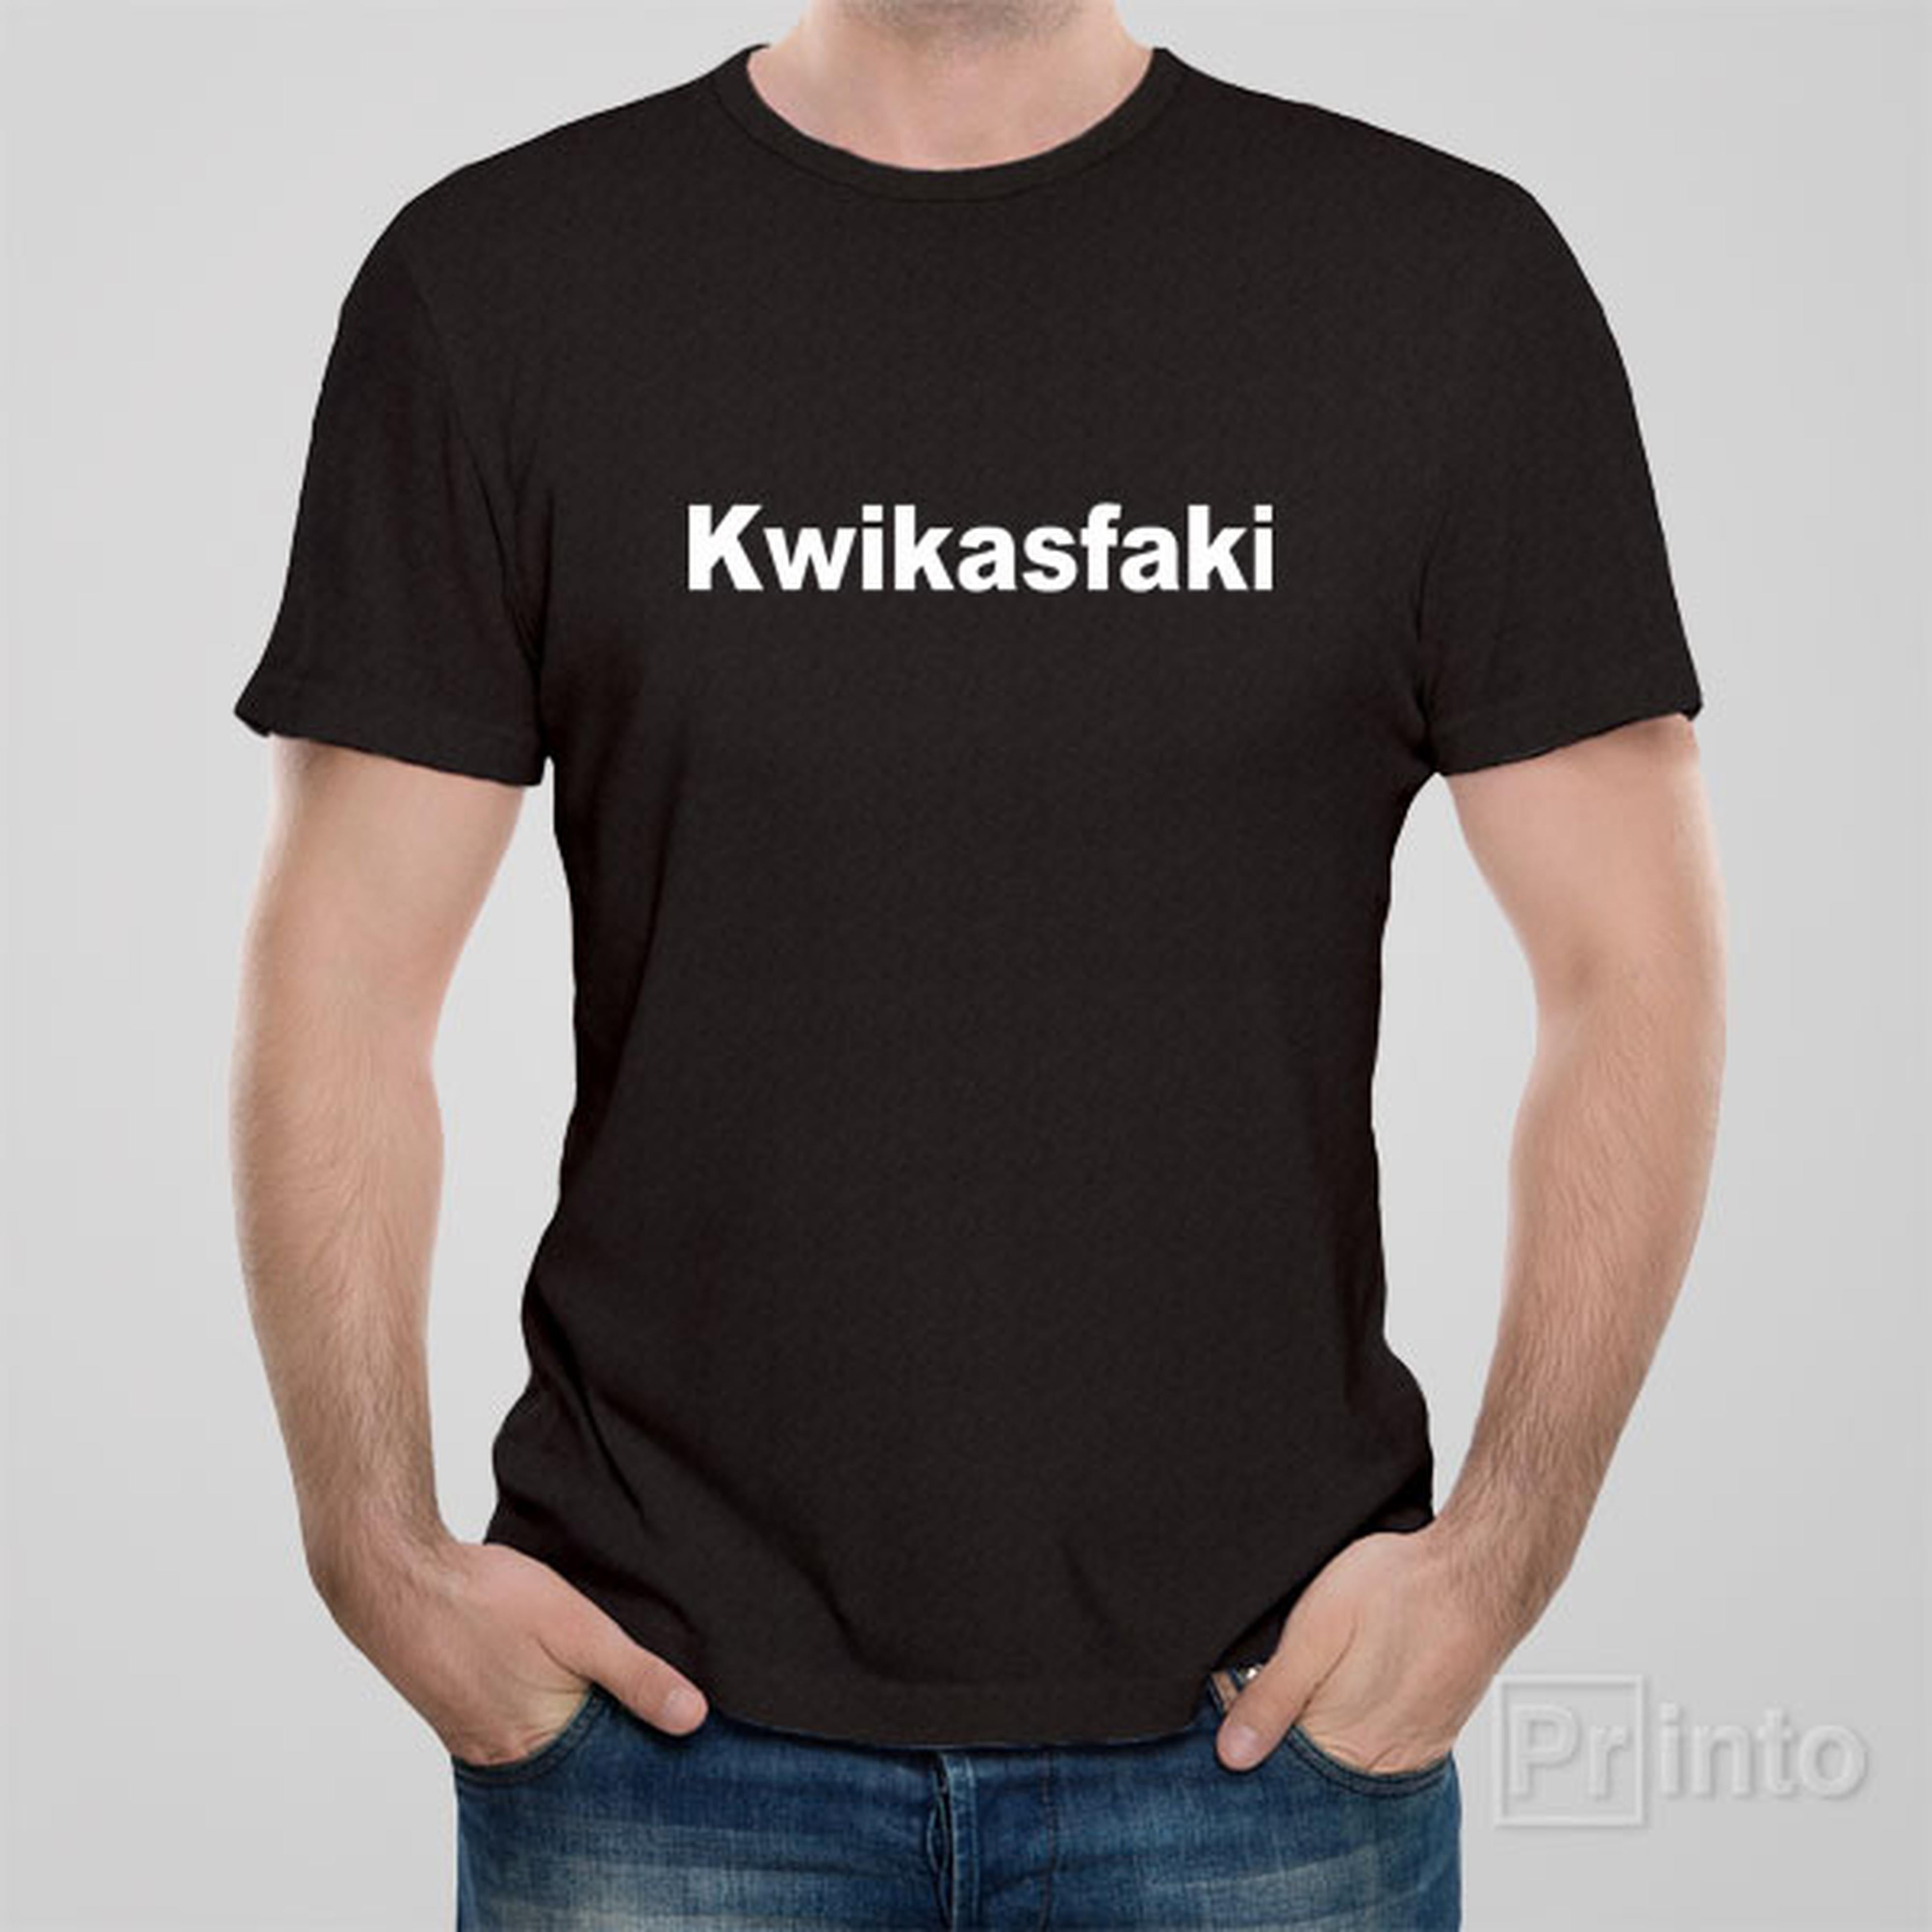 kwikasfaki-t-shirt